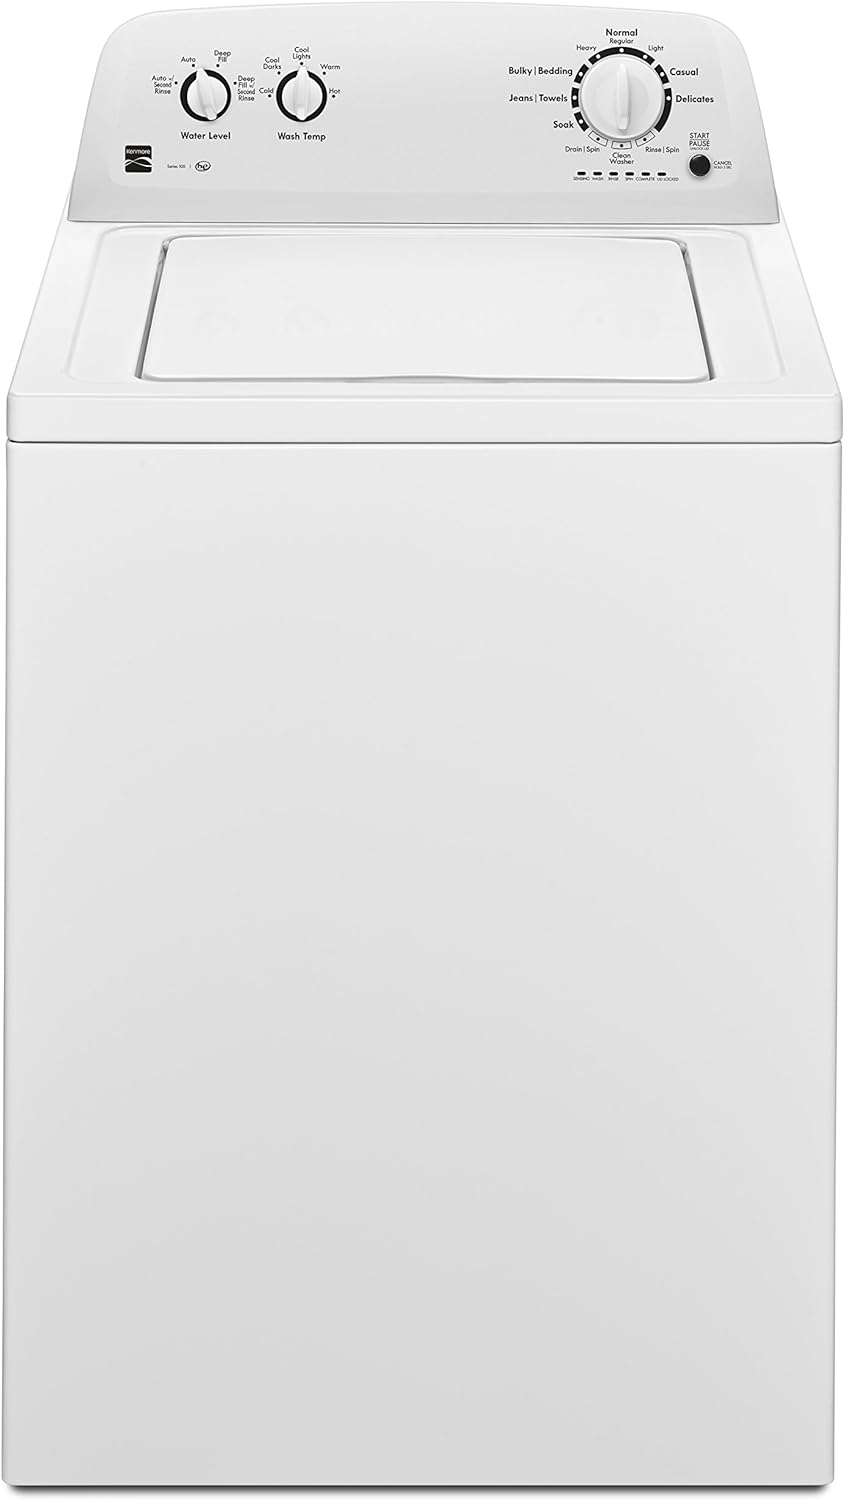 Best Washing Machine 7 kg: Top Picks for Efficient Laundry Days